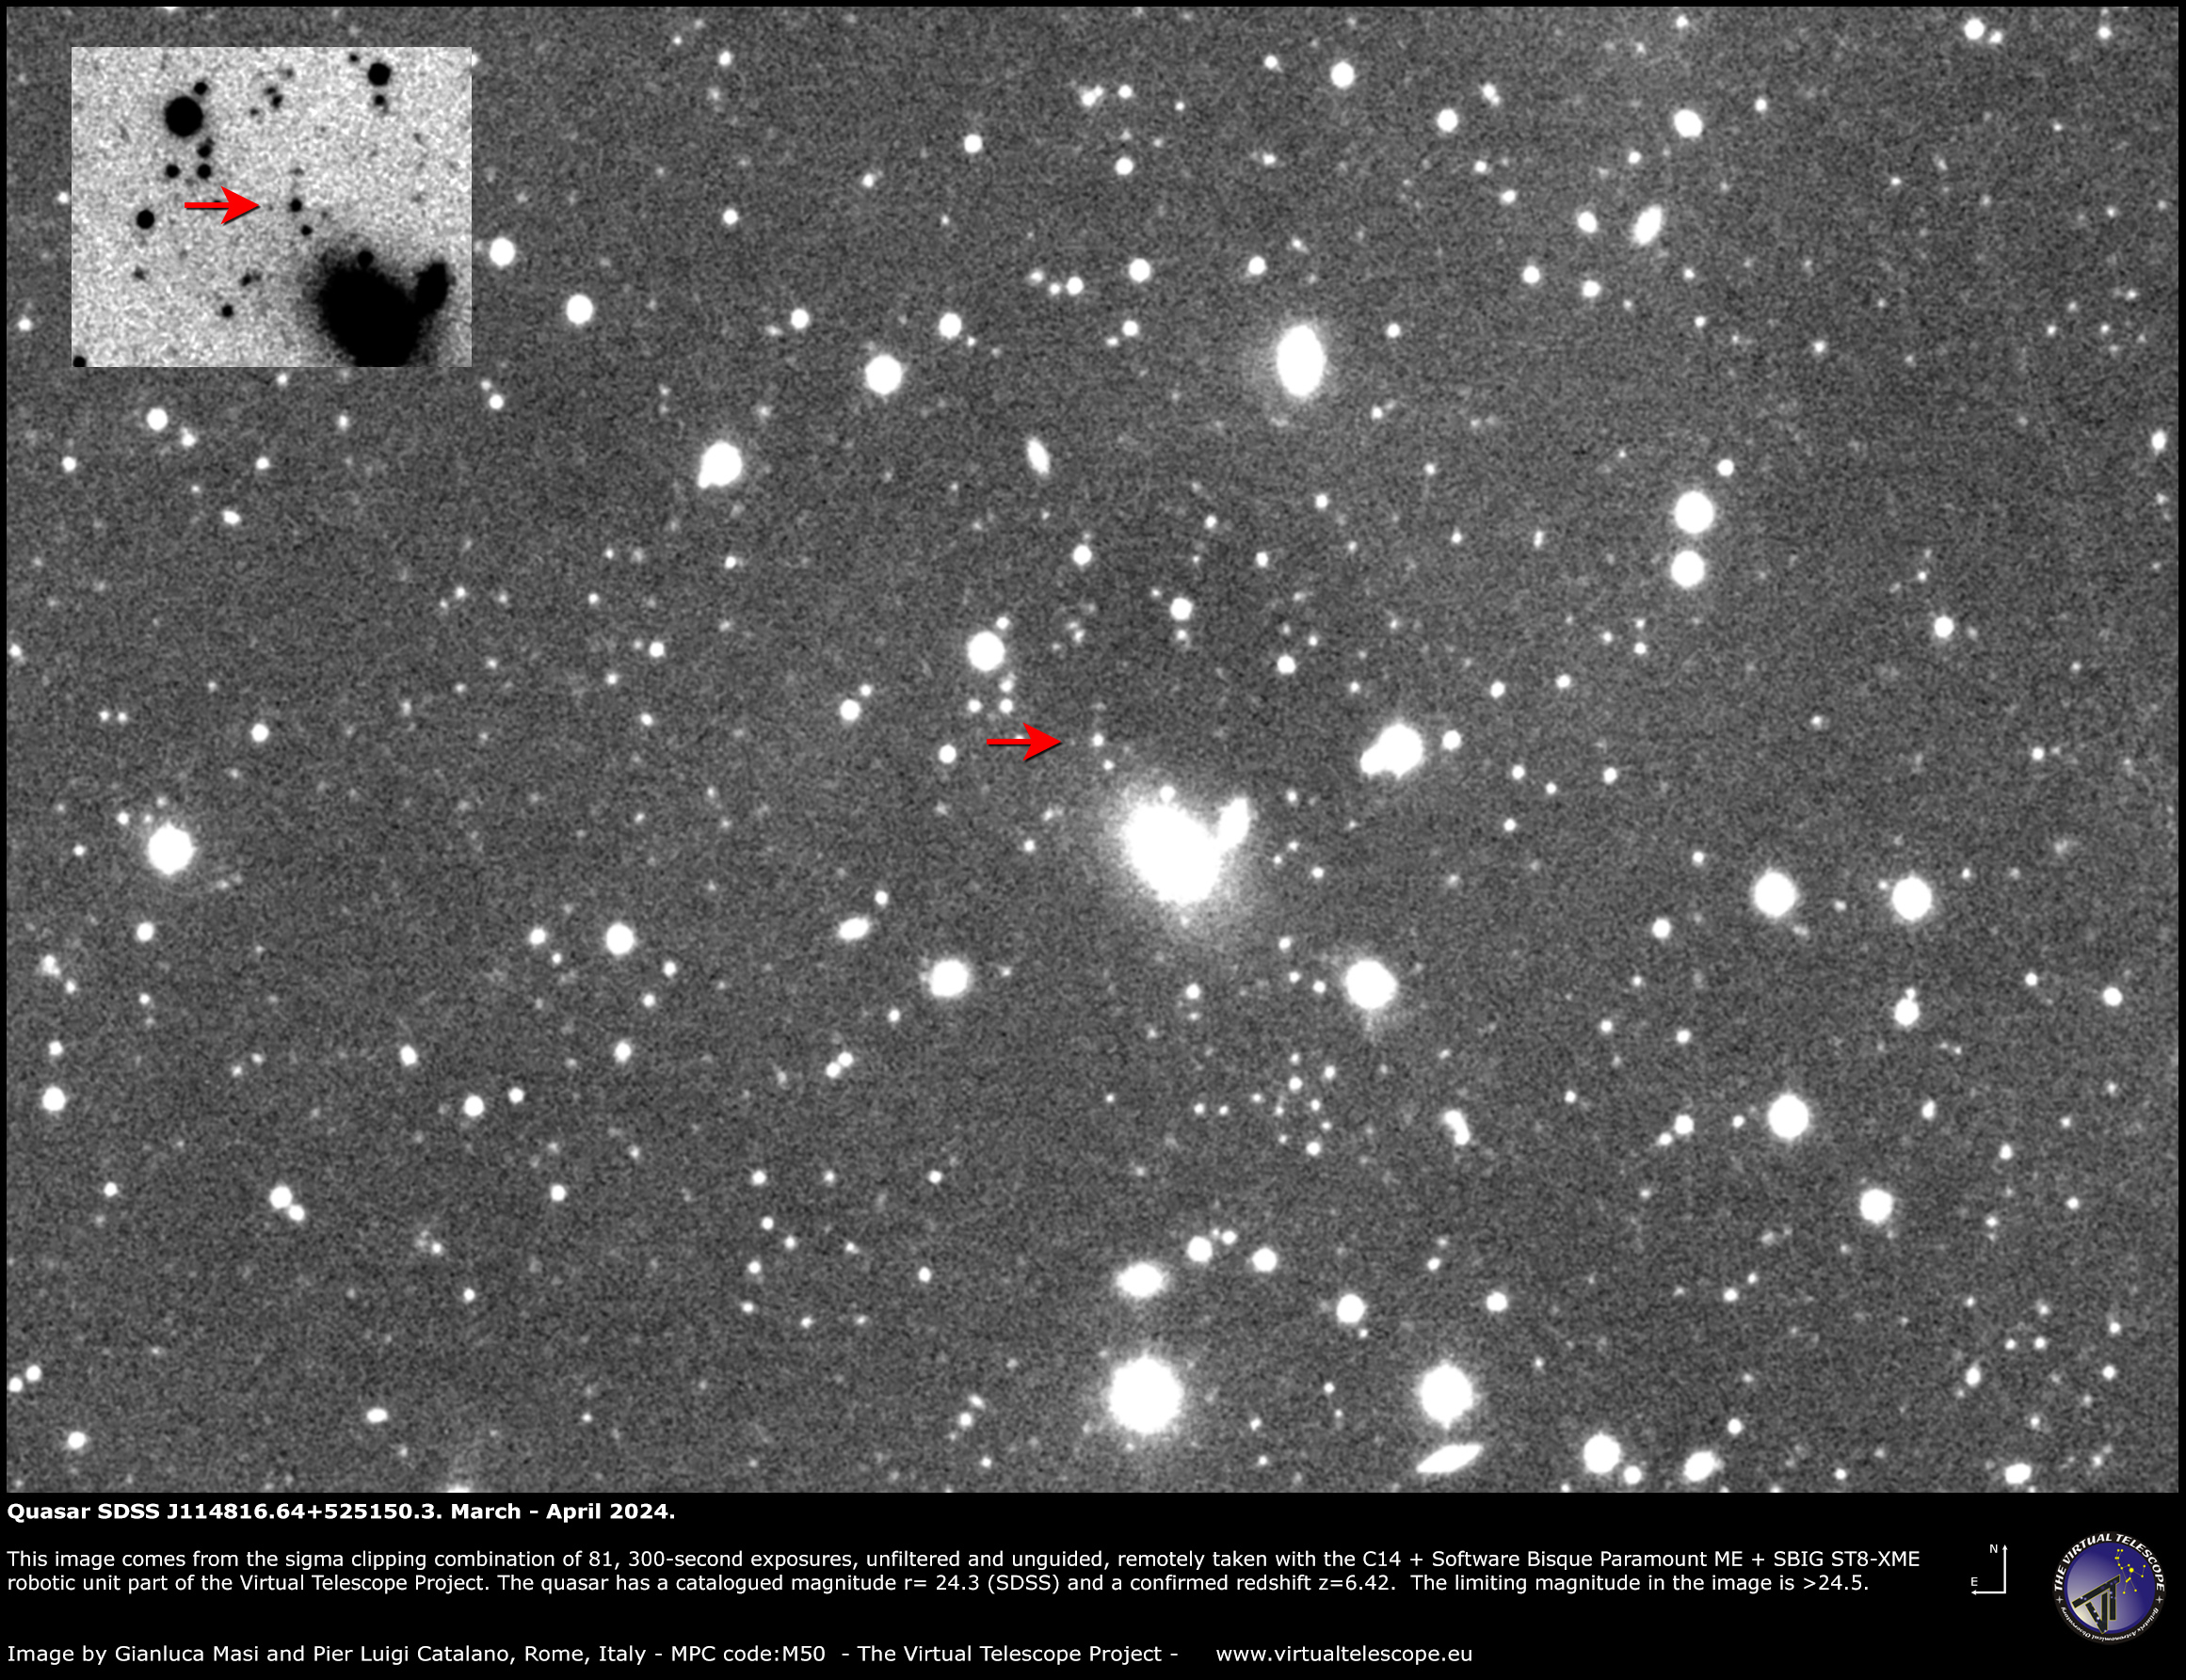 Quasar SDSS J114816.64+525150.3 imaged via the Virtual Telescope Project between Mar. and Apr. 2024.